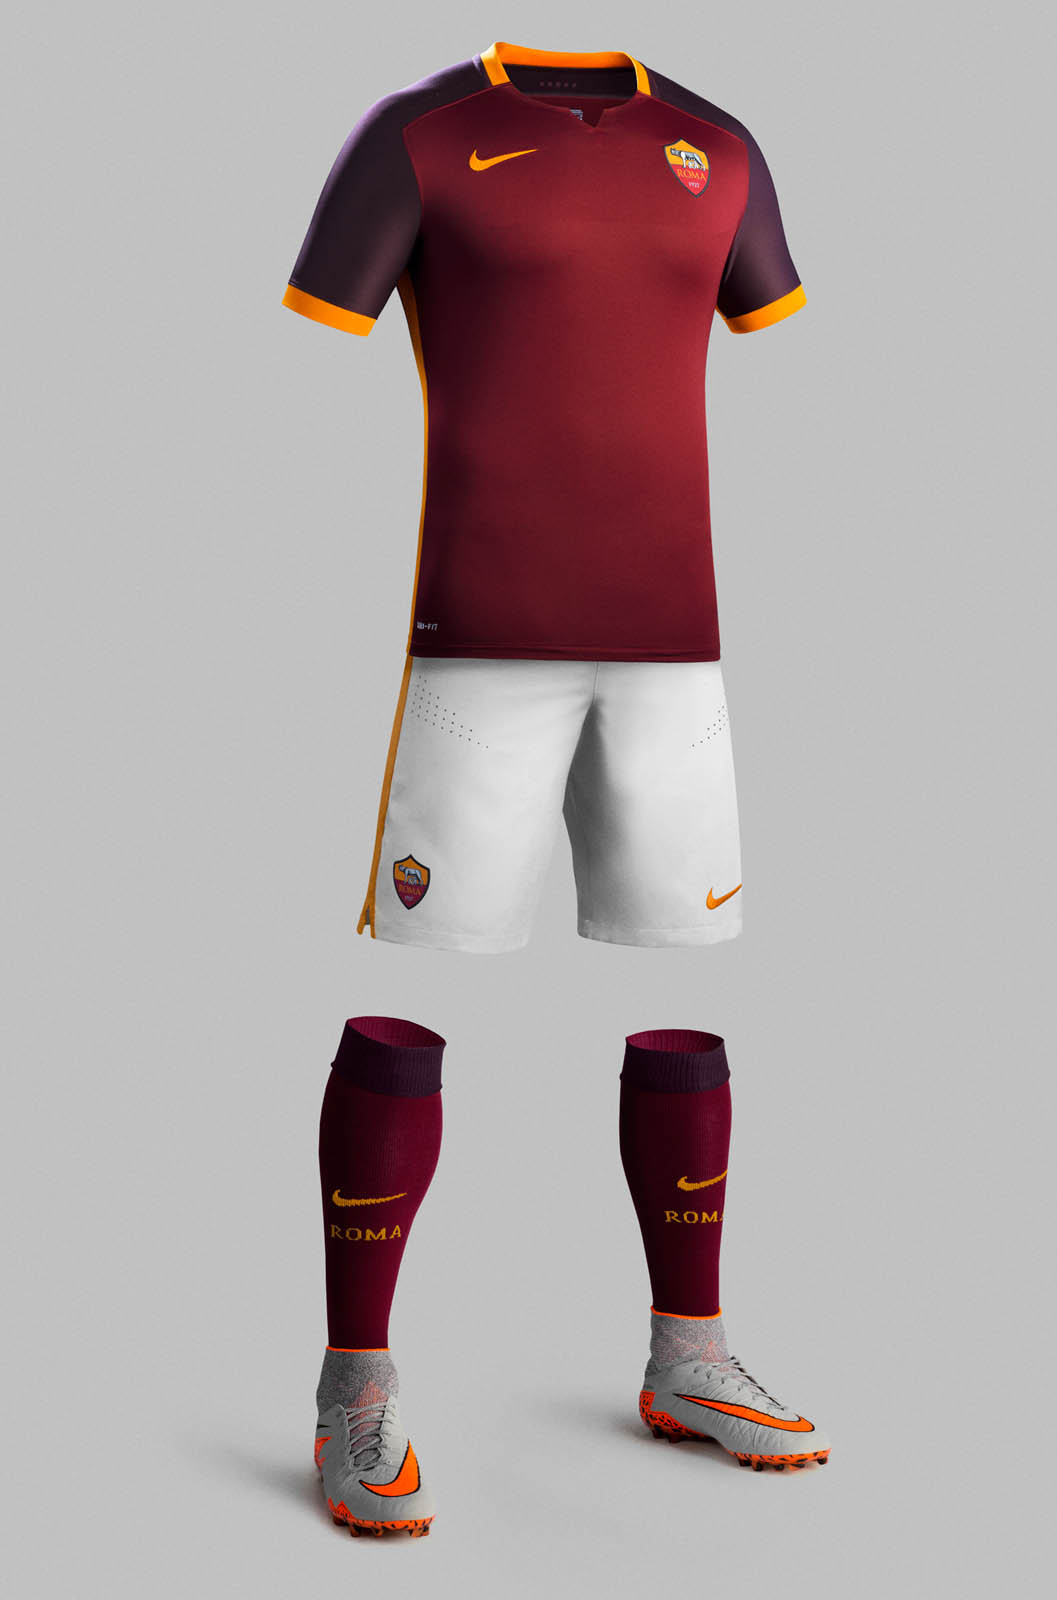 roma jersey 2016